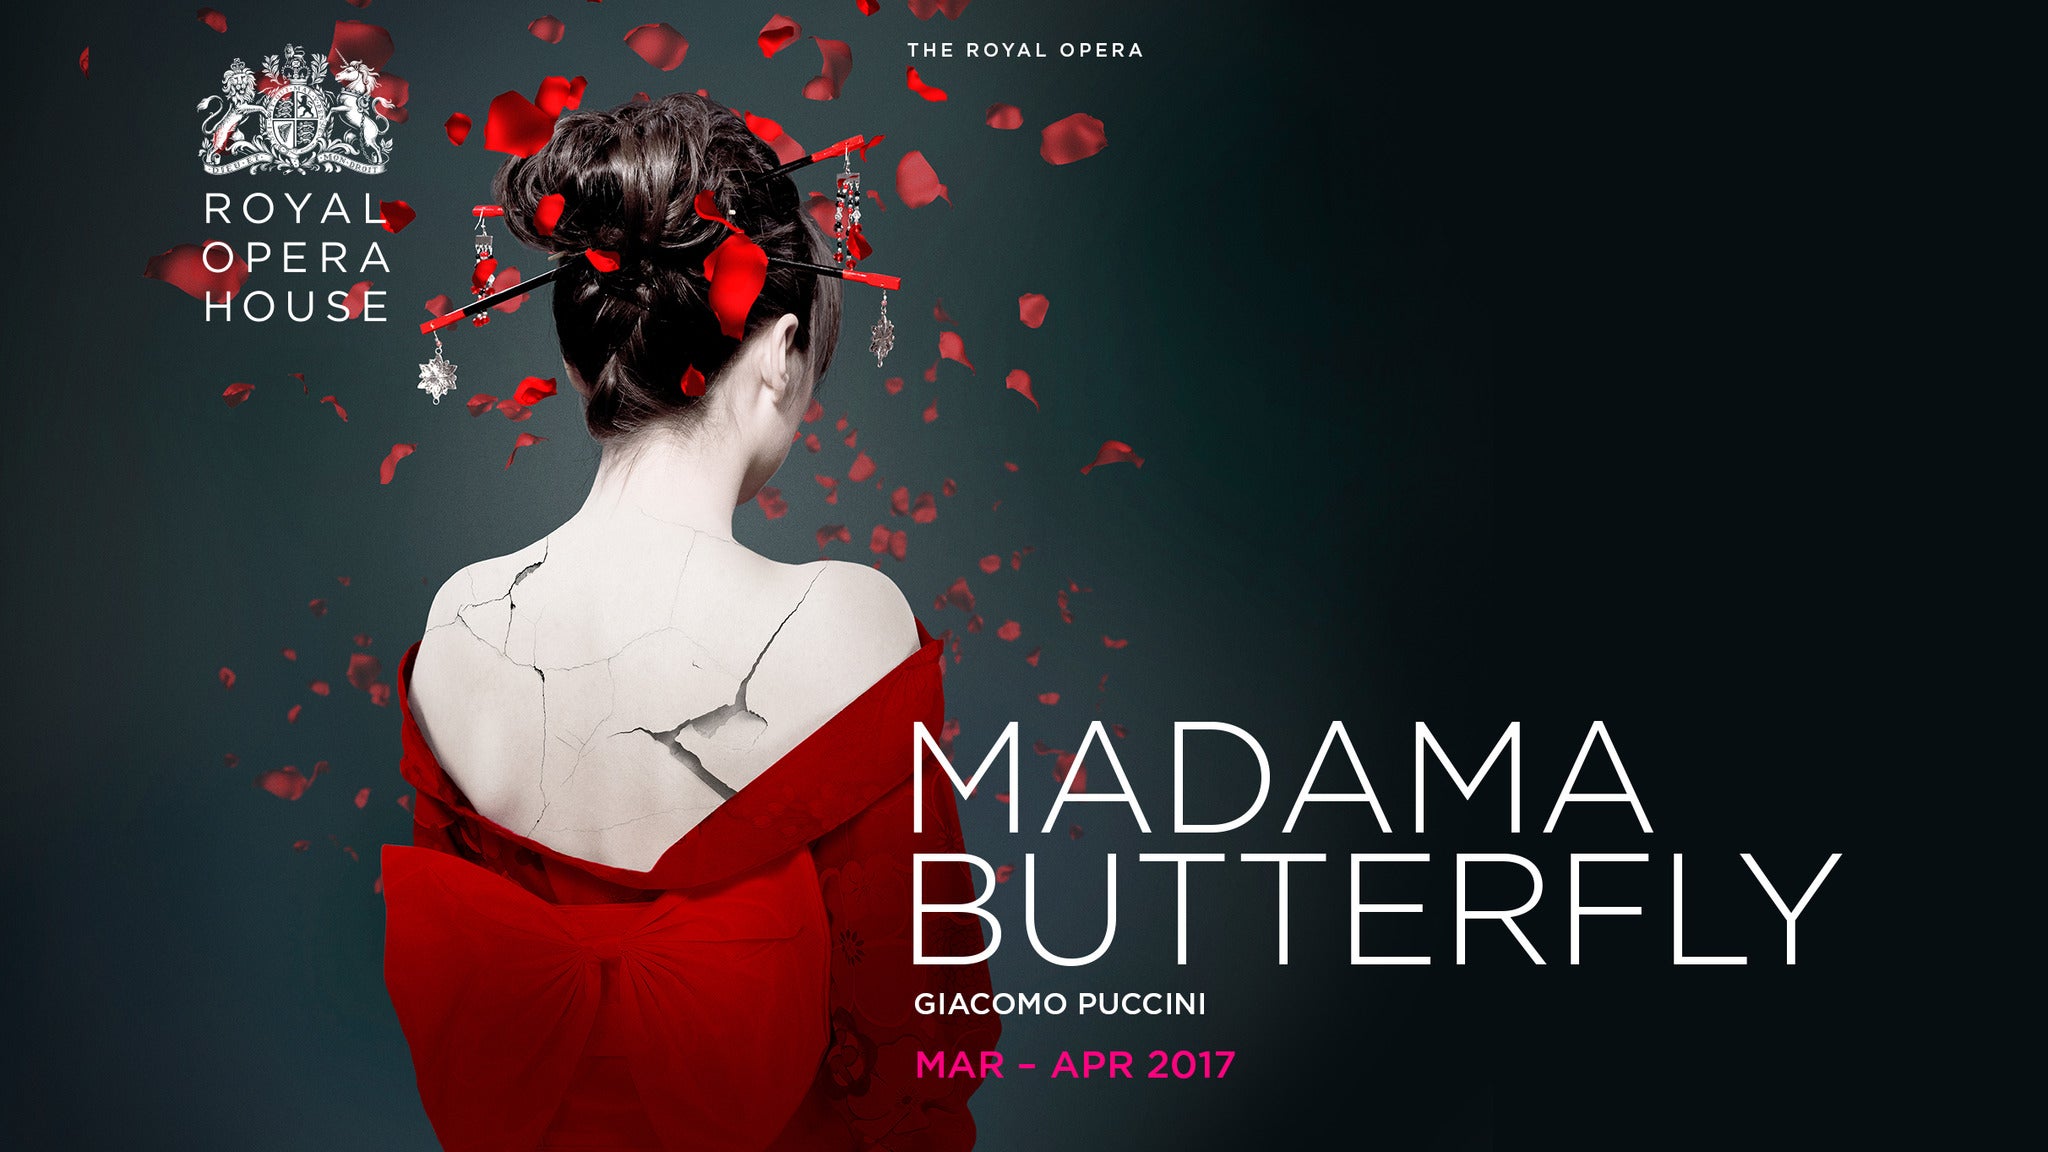 Madama Butterfly Royal Opera House Billets Dates d'événements et